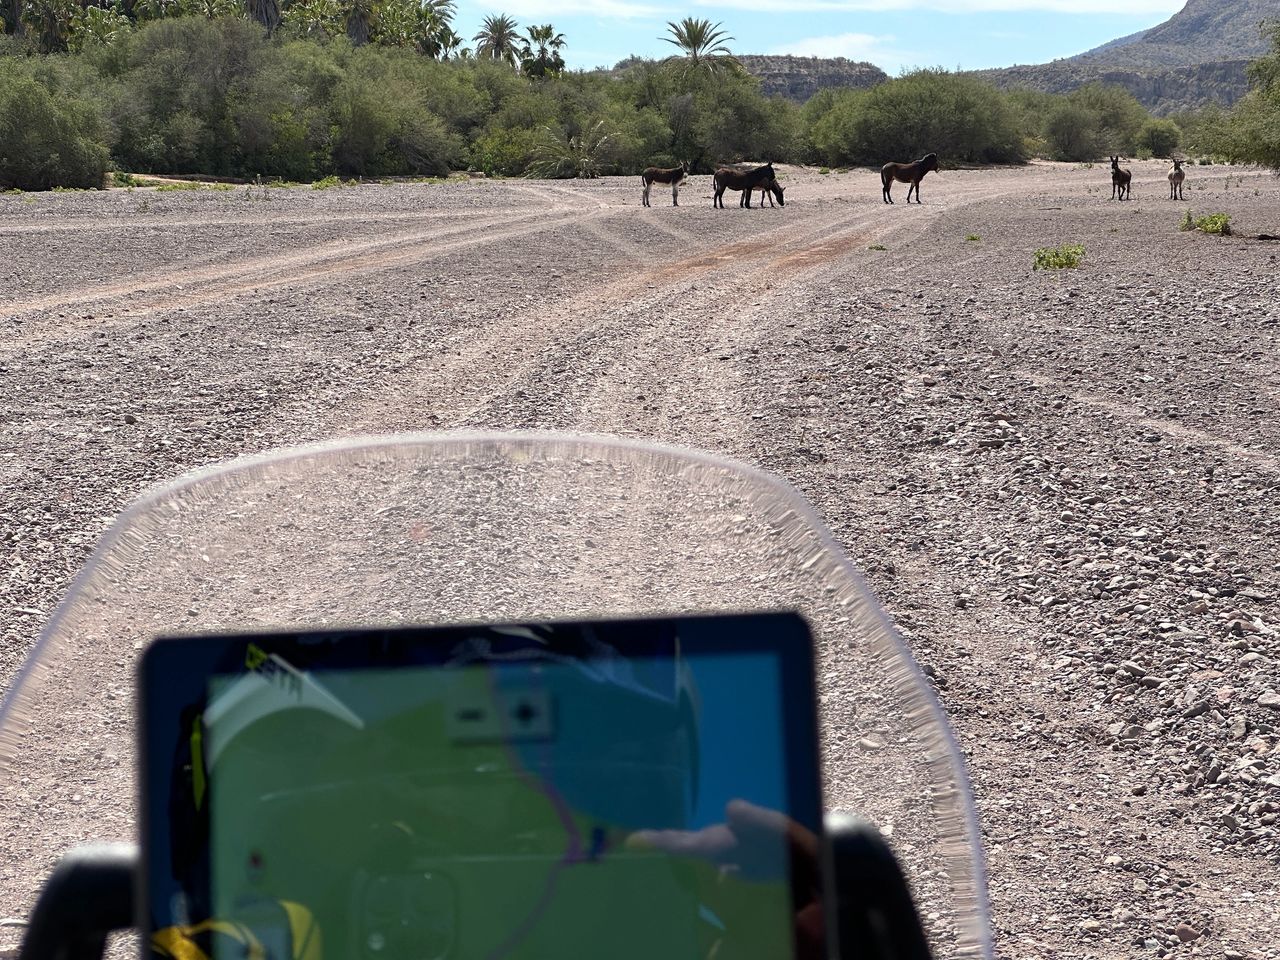 Donkeys in the road in San Nicolas.